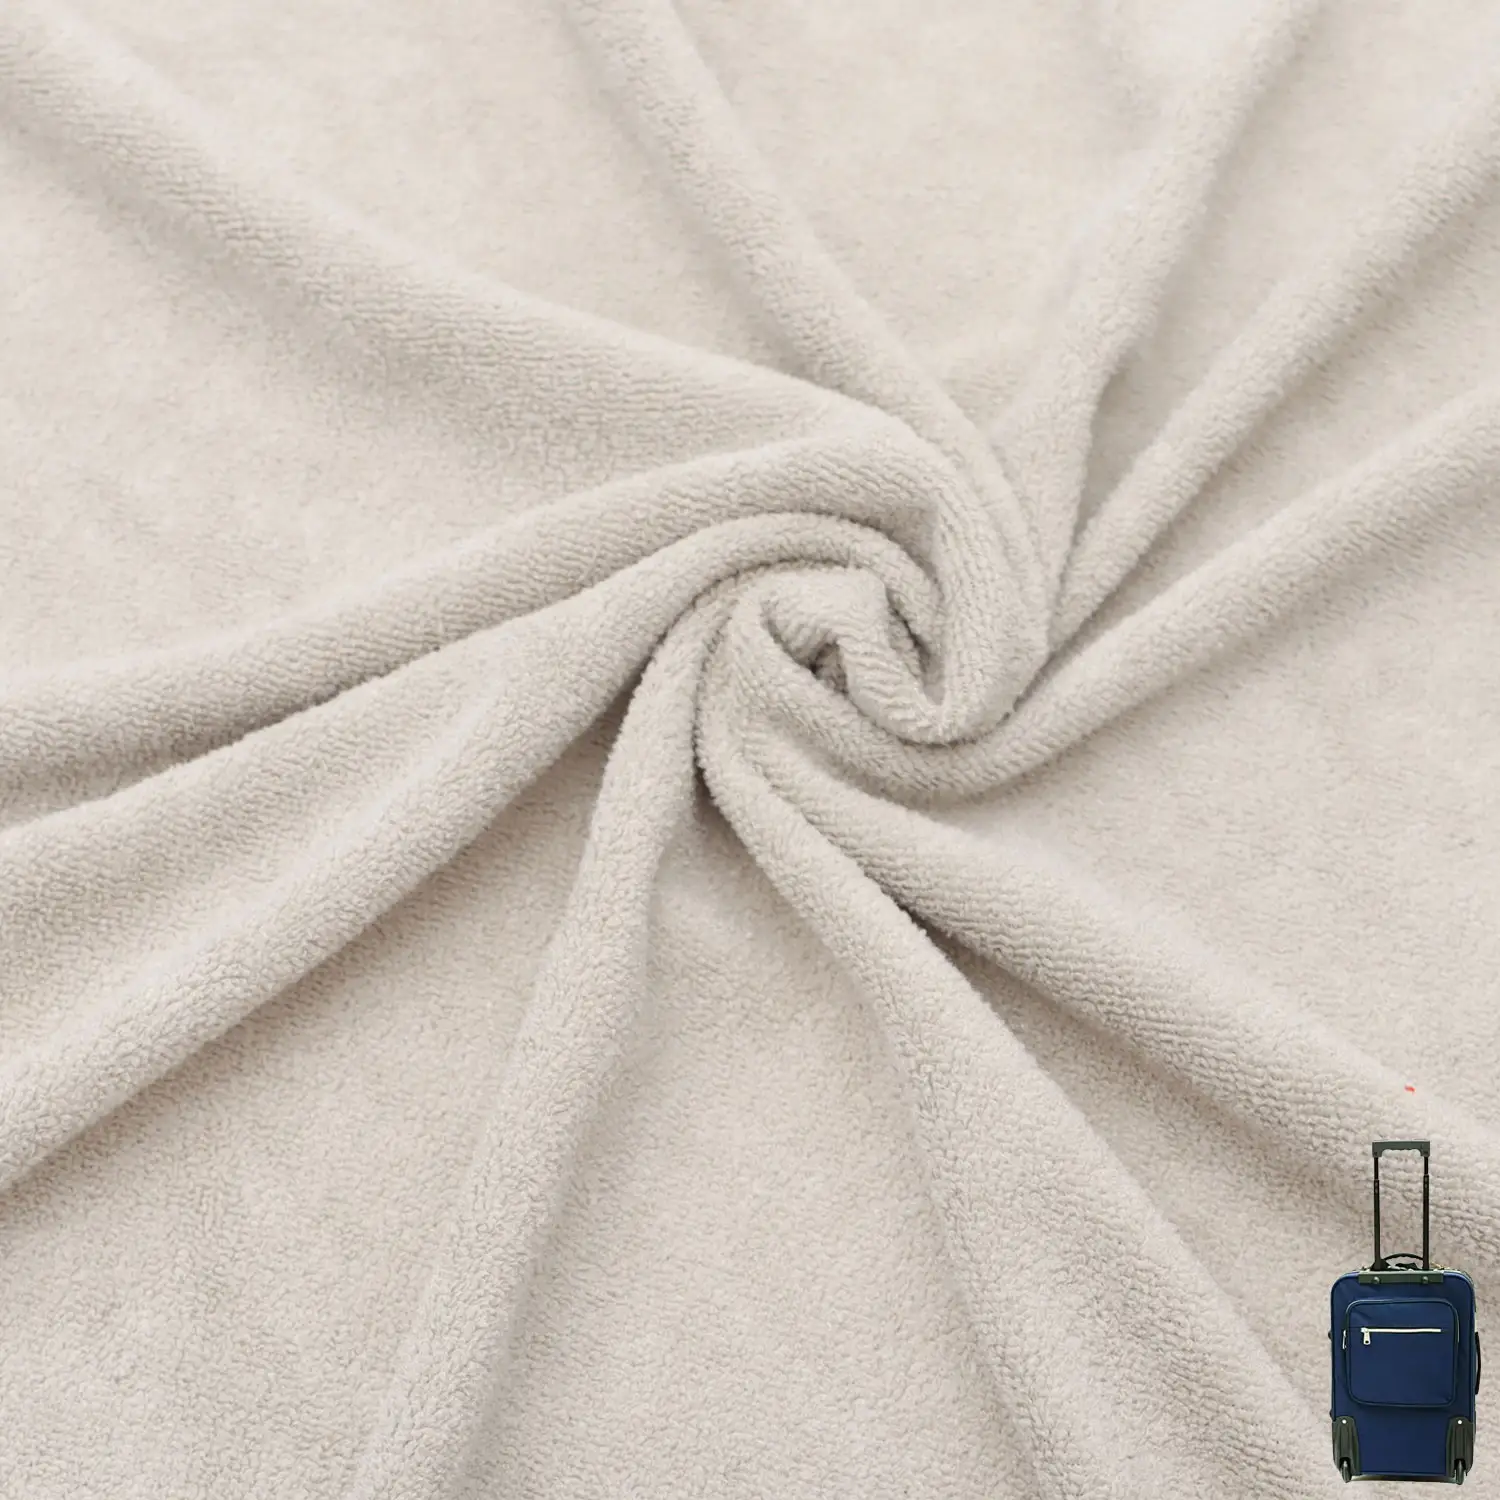 Proveedor de tela textil Bucle antiestático Bucle suave cosible y lavable Bucle 100% Tejido de poliéster para ropa